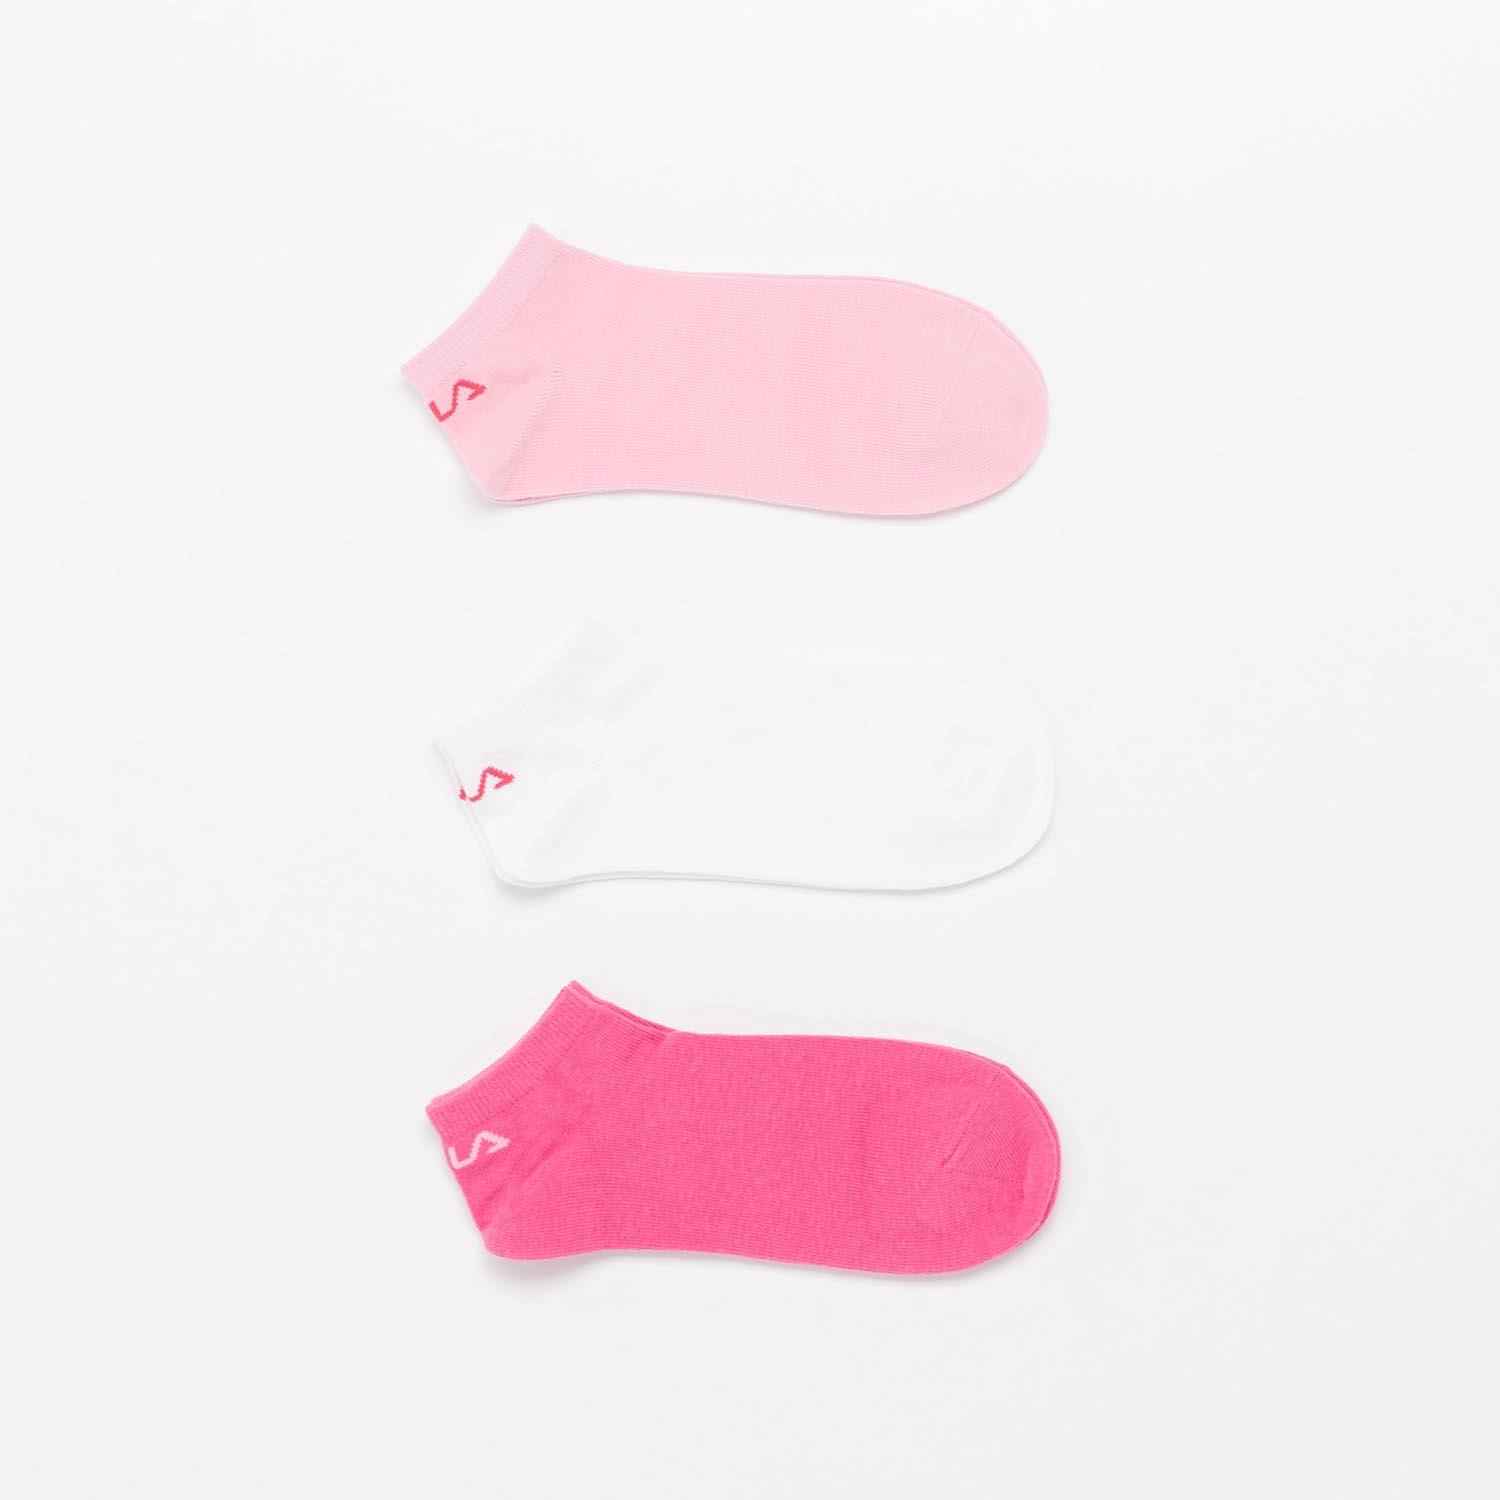 calcetines-mujer - Comprar online en Lady Woman